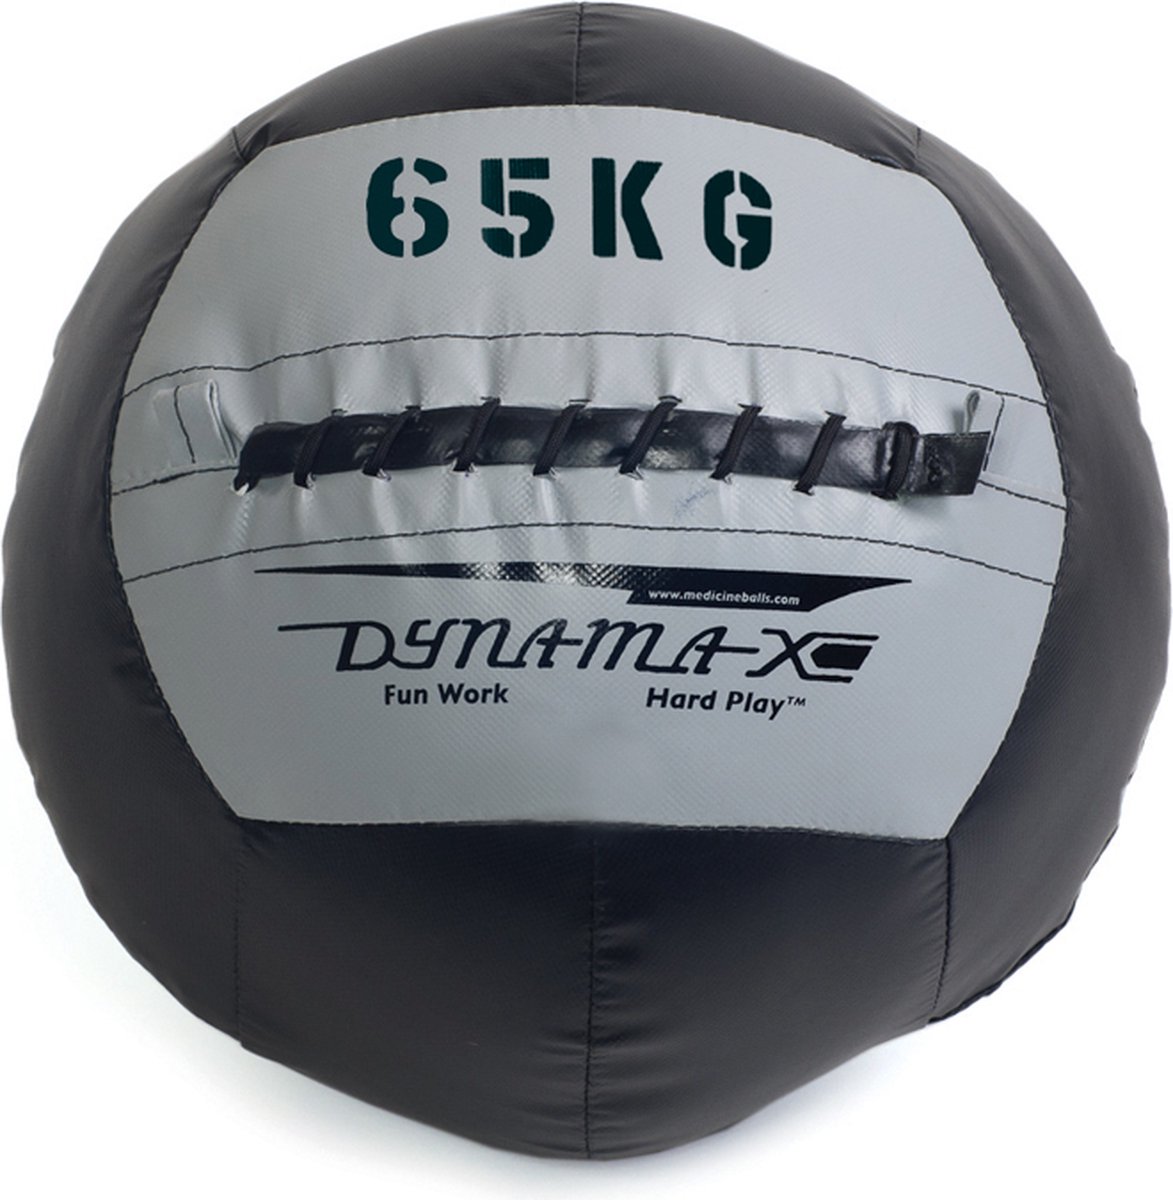 Dynamax Atlas Ball 65 kg